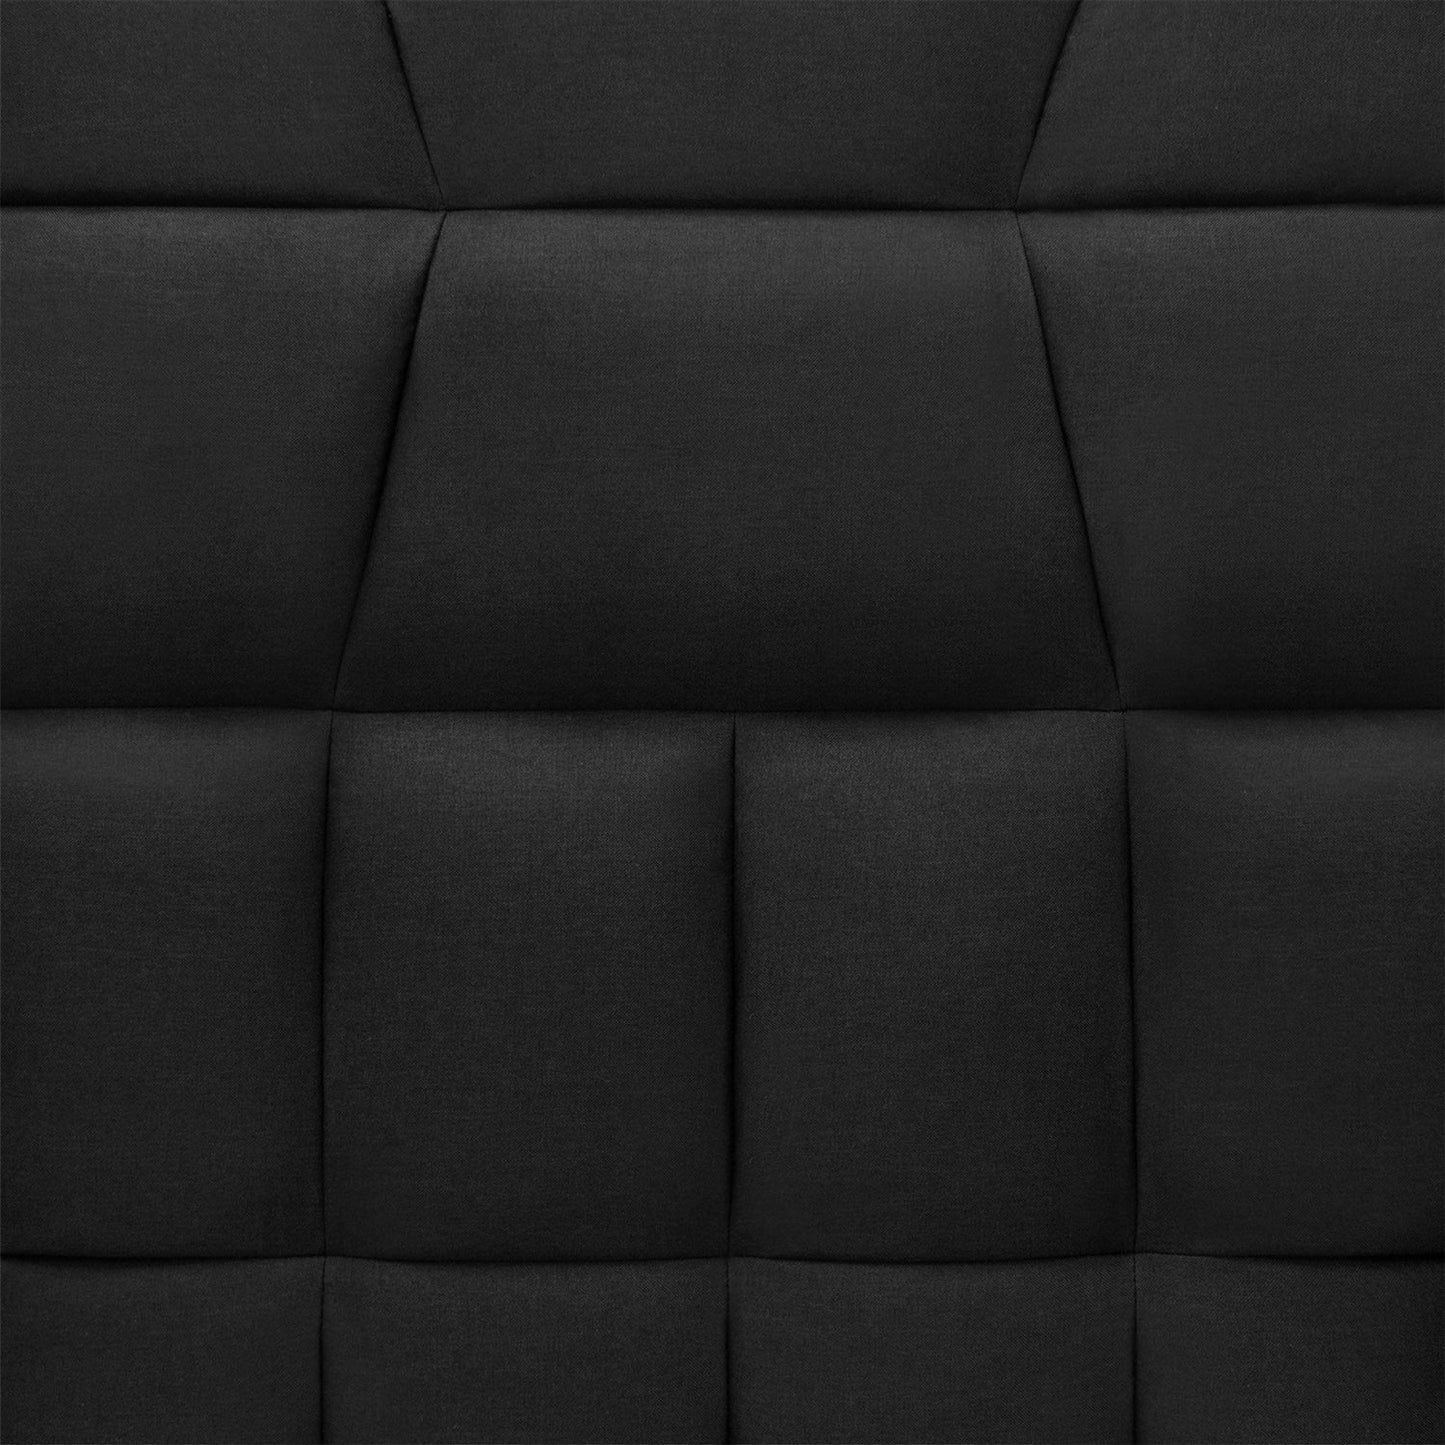 Living Room > Sofas - Plush Black Split-Back Design Convertible Linen Tufted Futon W/ 2 Pillows